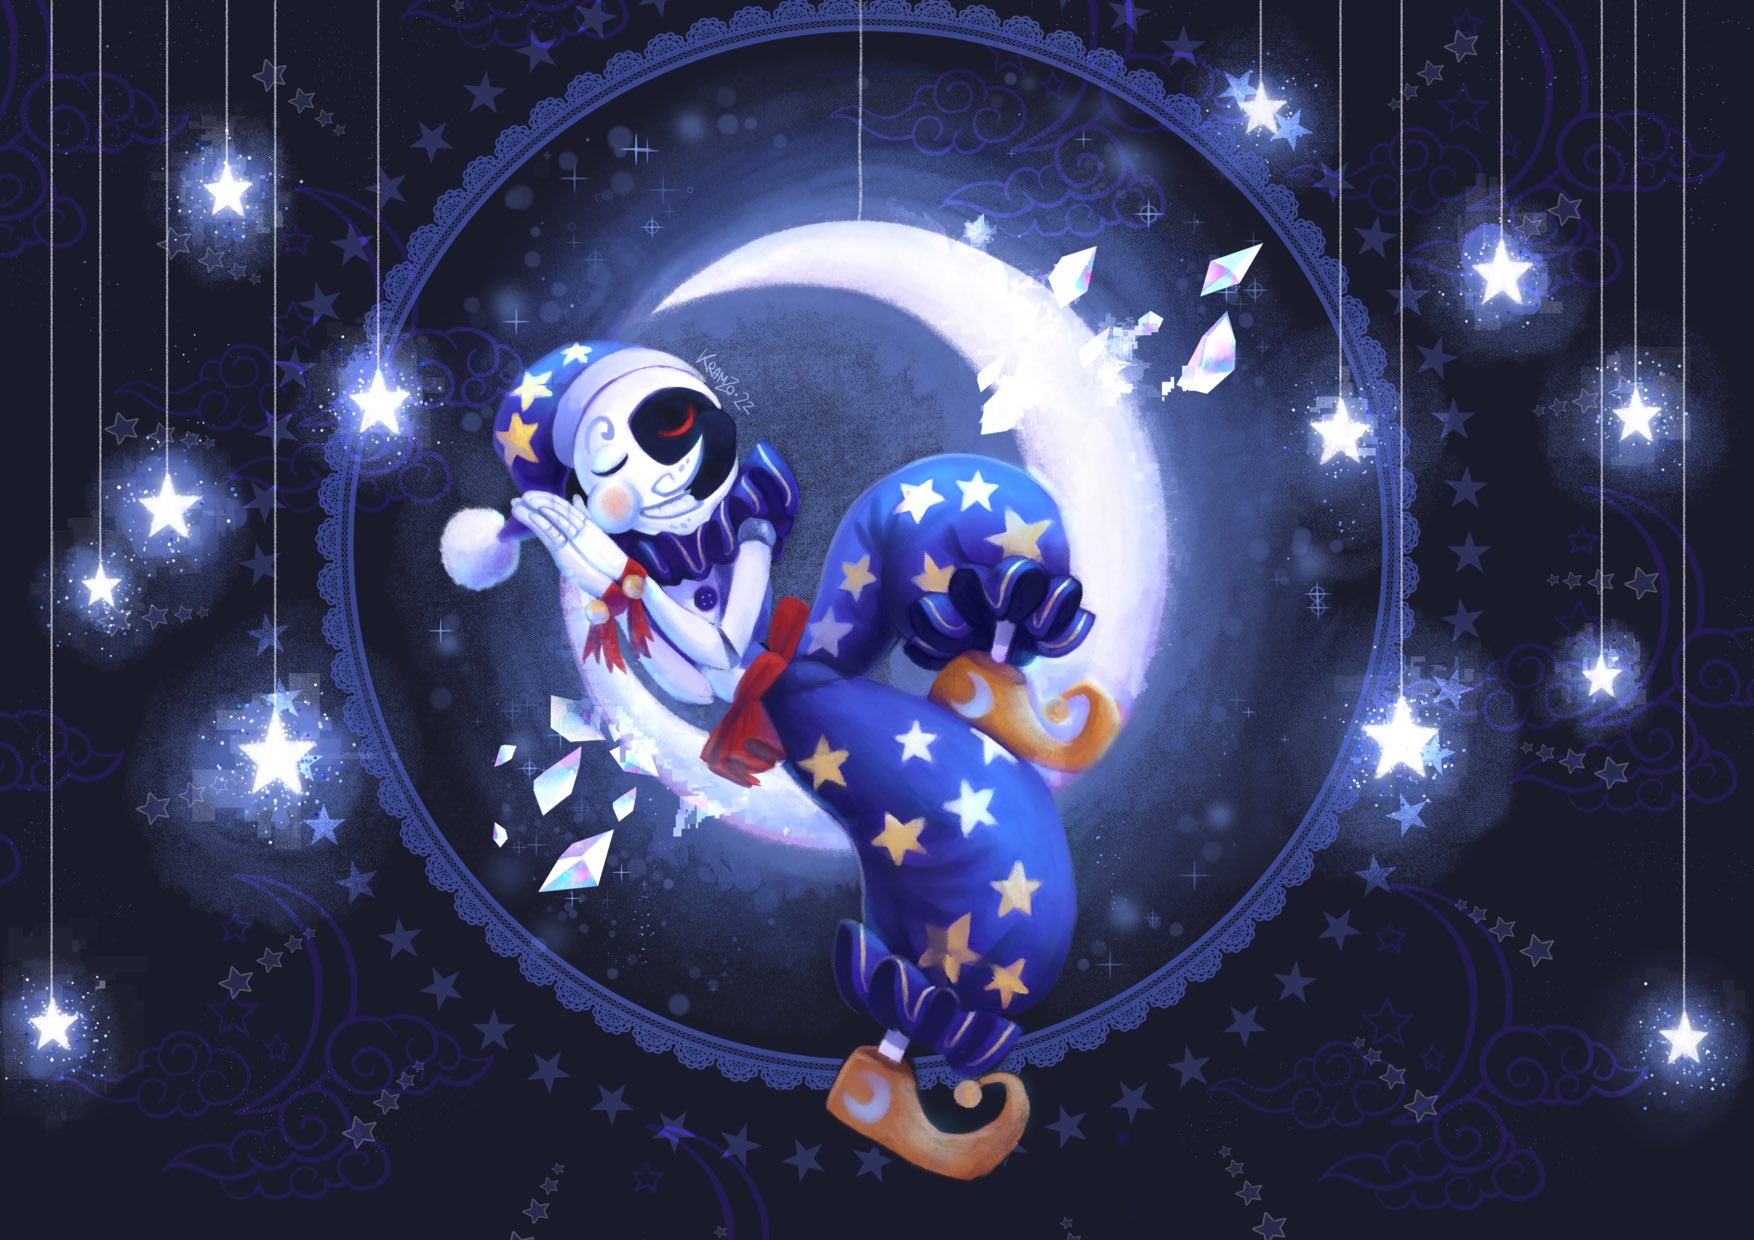 ✨Kei✨ケイ Moonieful wallpaper for all your Moondrop needs!